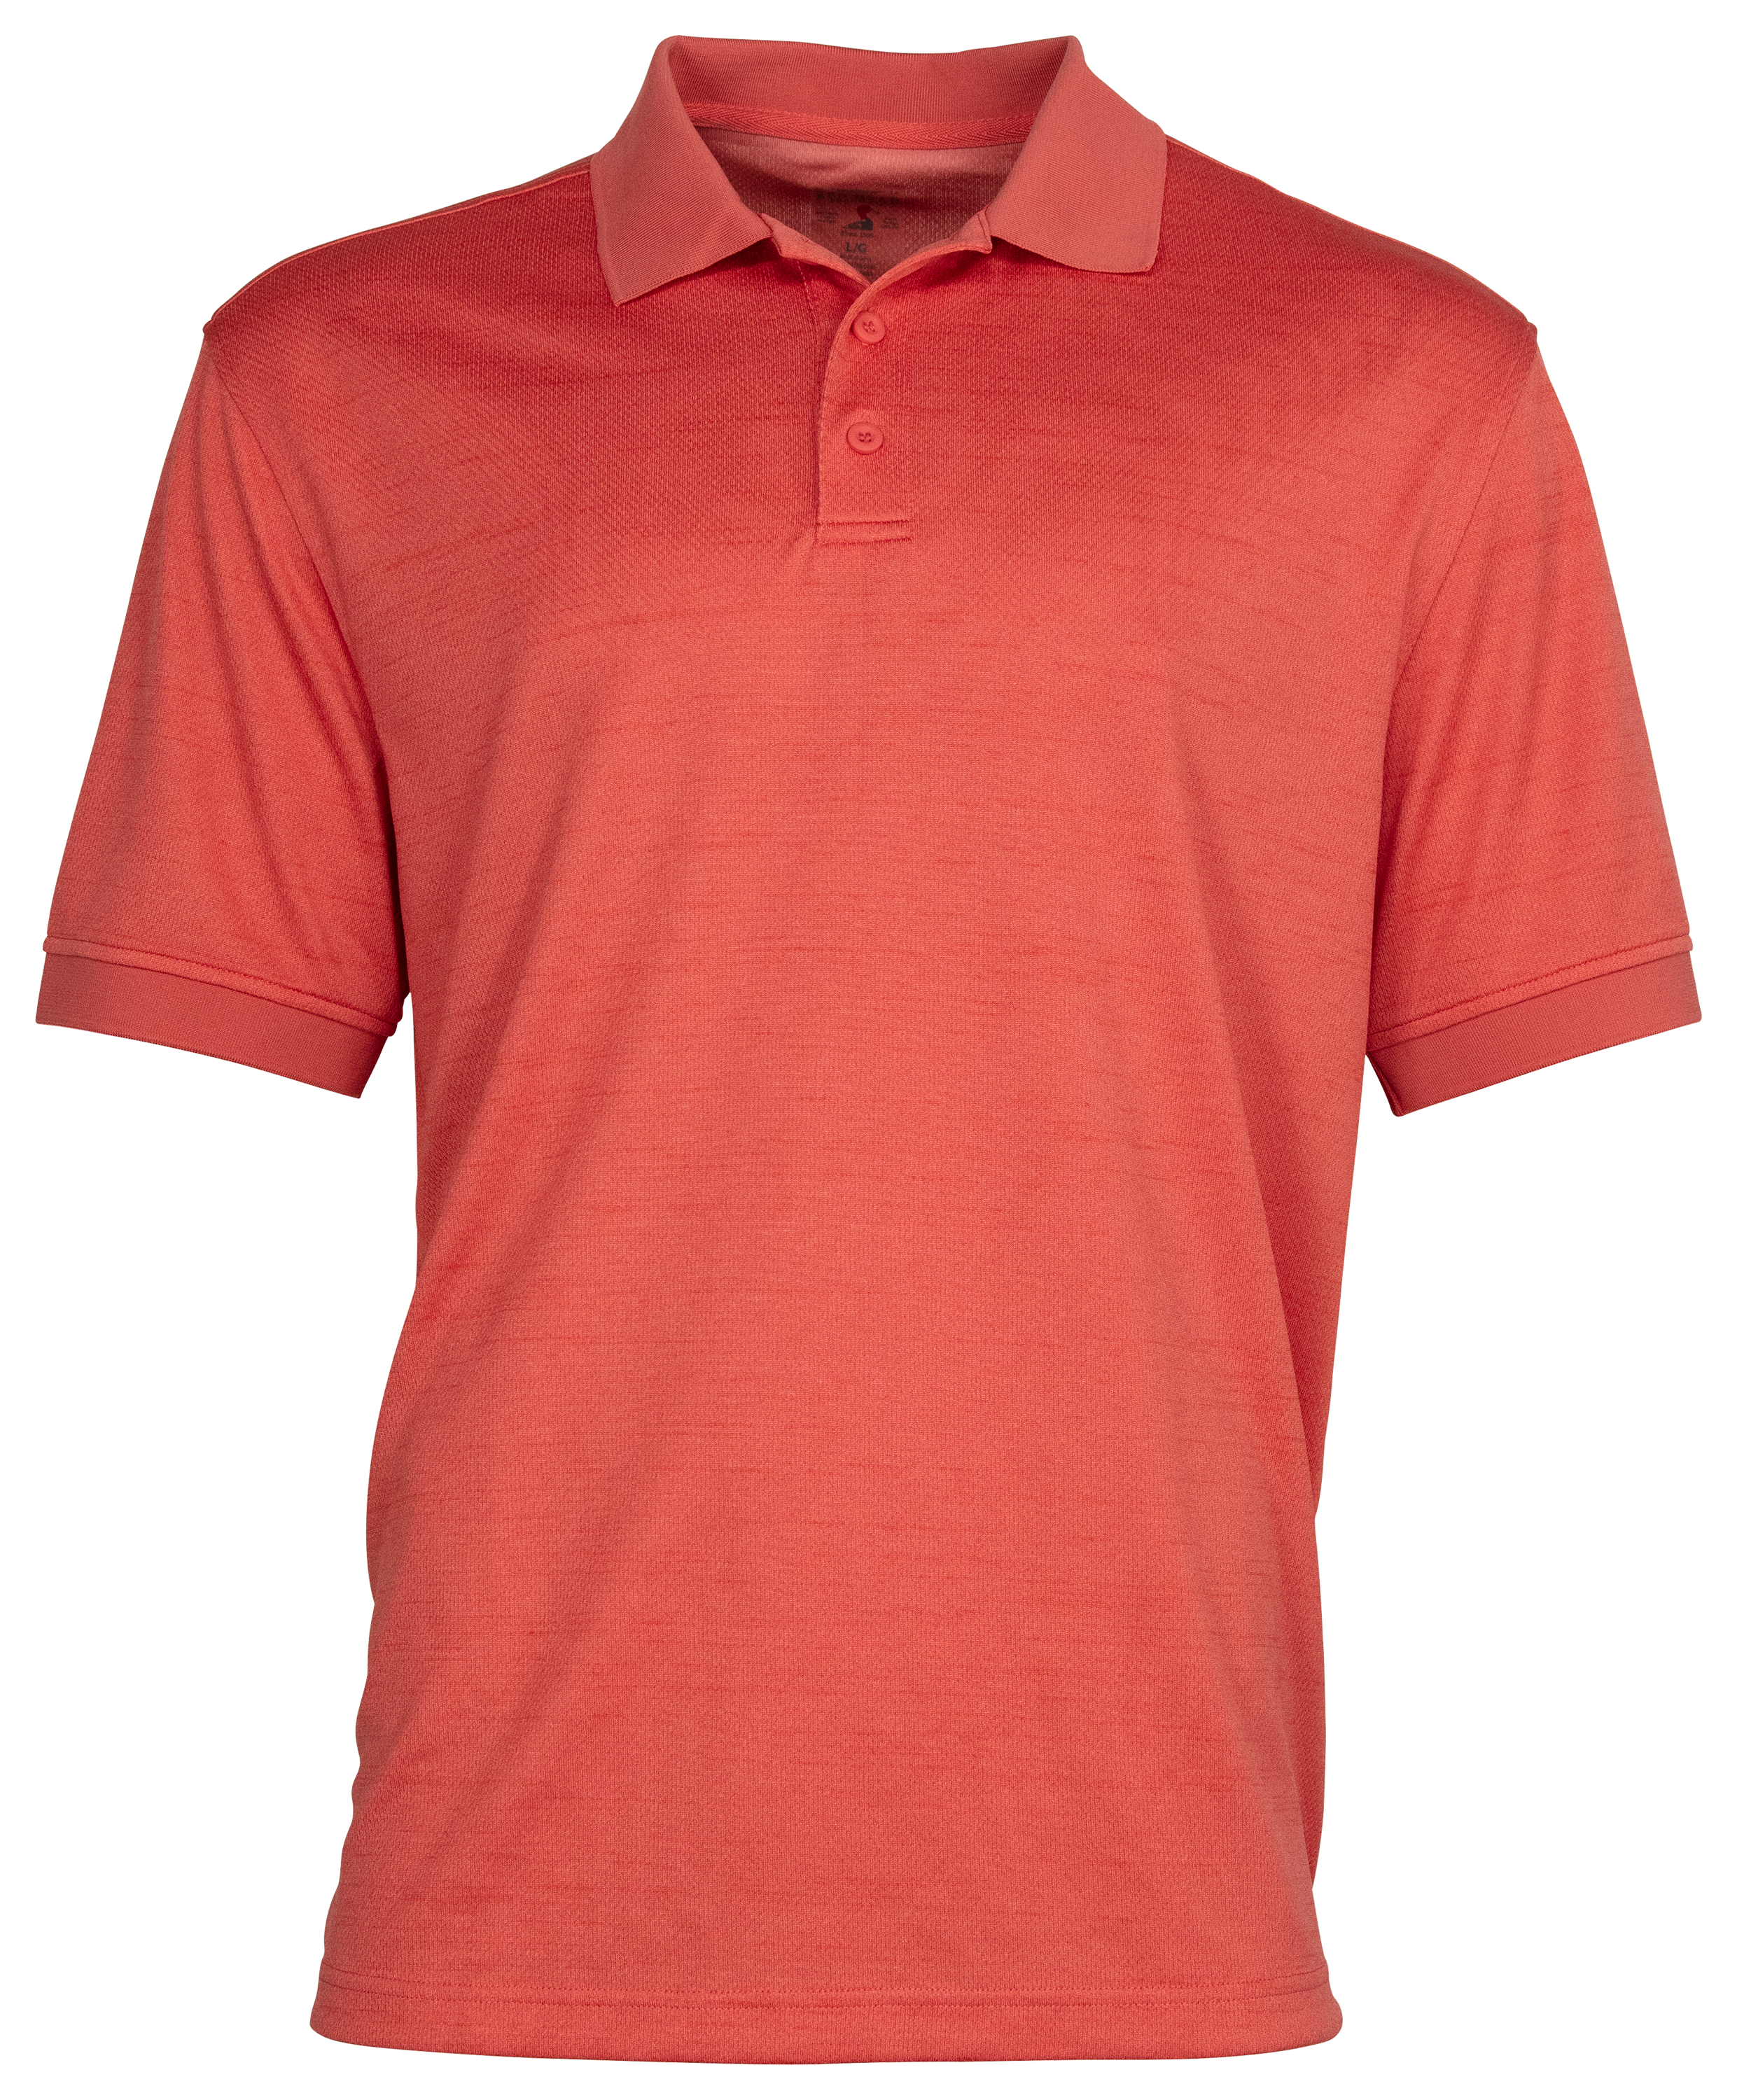 RedHead Angler Series Long-Sleeve Shirt for Men